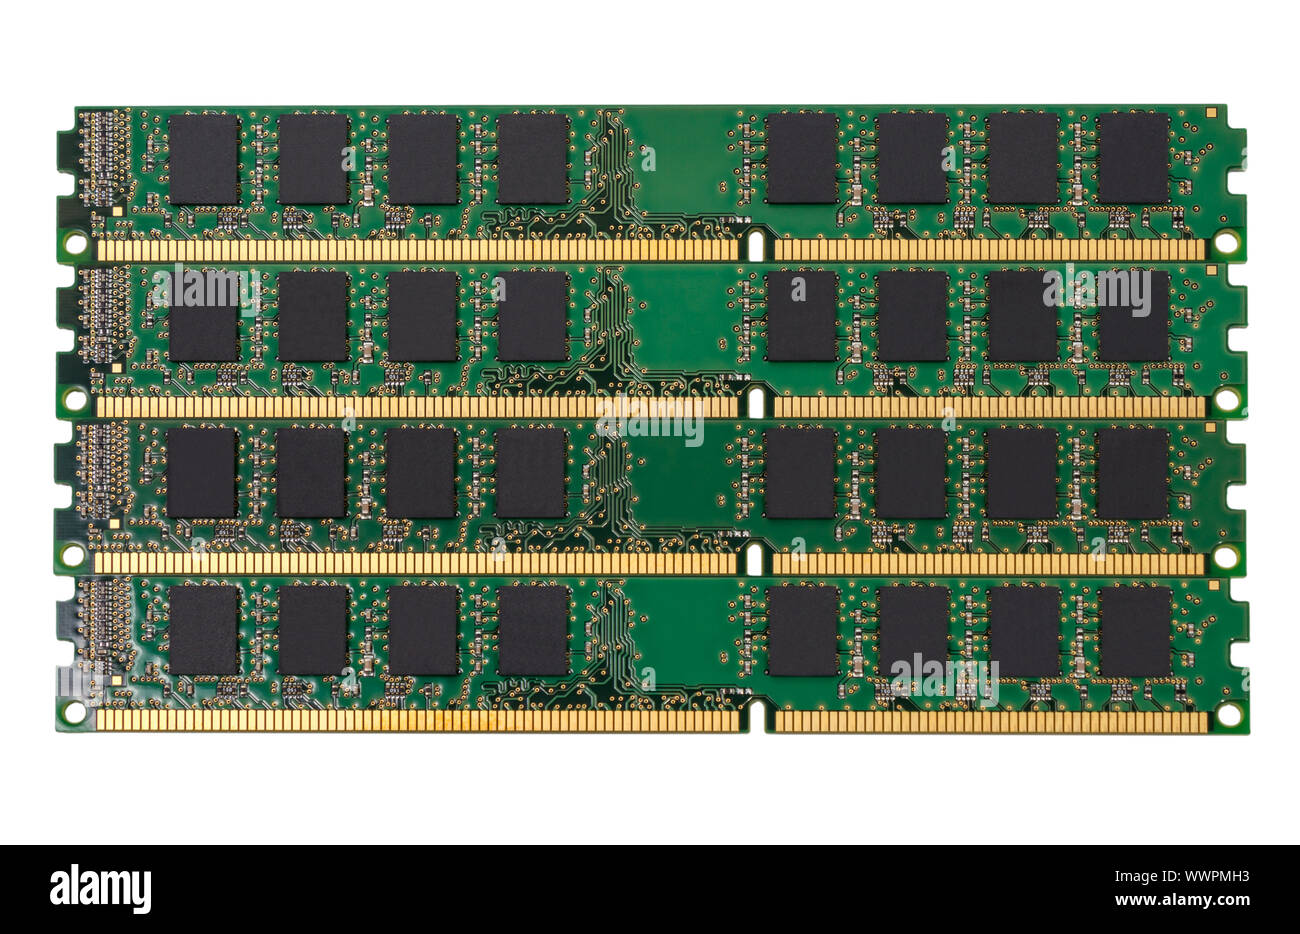 Electronic collection - computer random access memory (RAM) modules Stock Photo